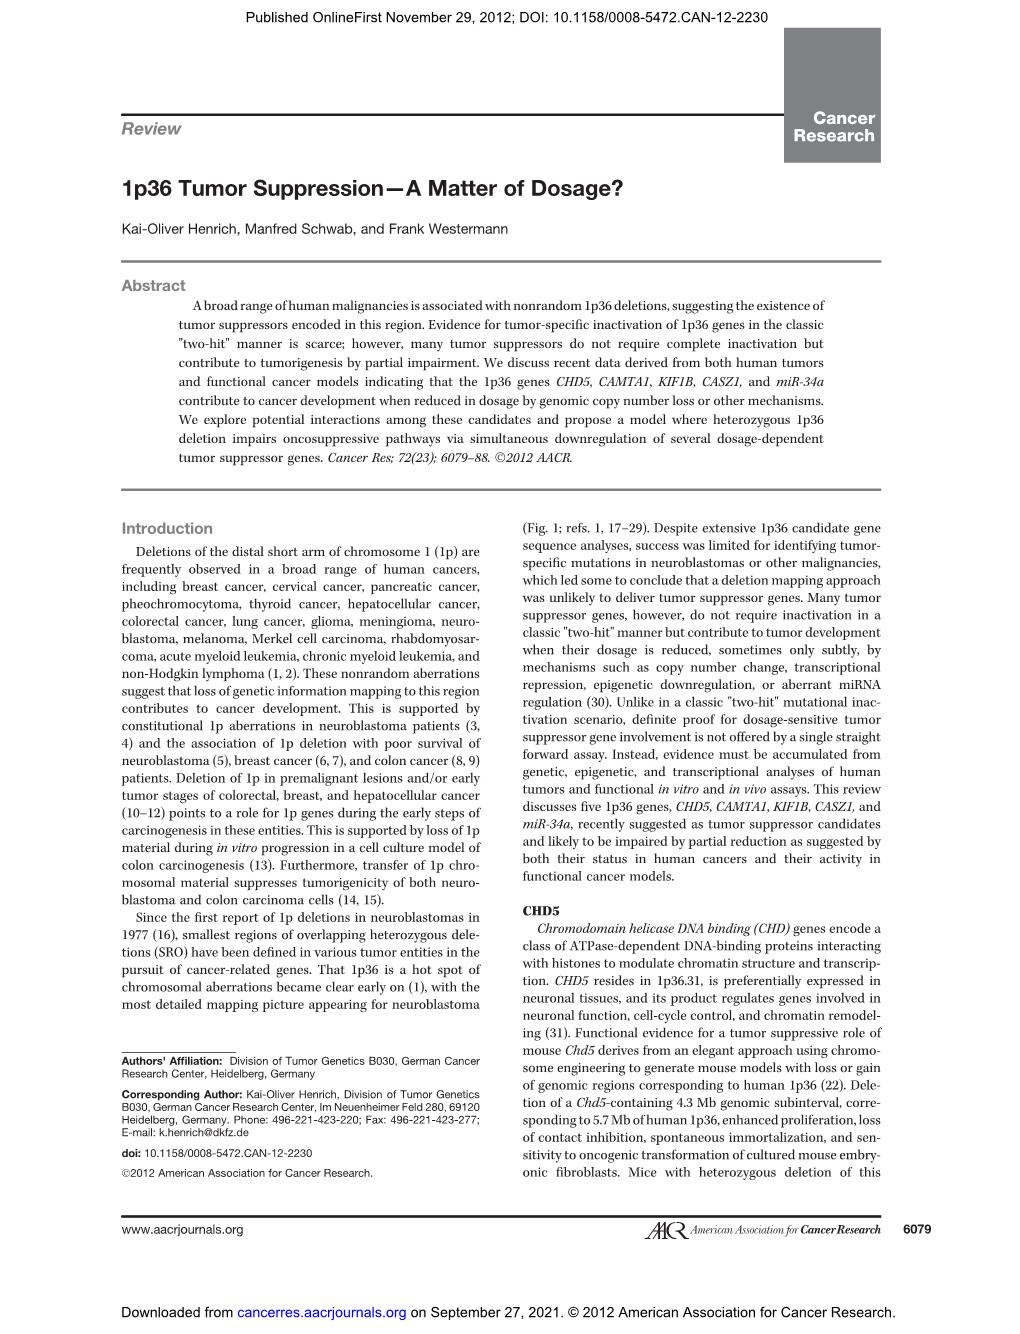 1P36 Tumor Suppression—A Matter of Dosage?